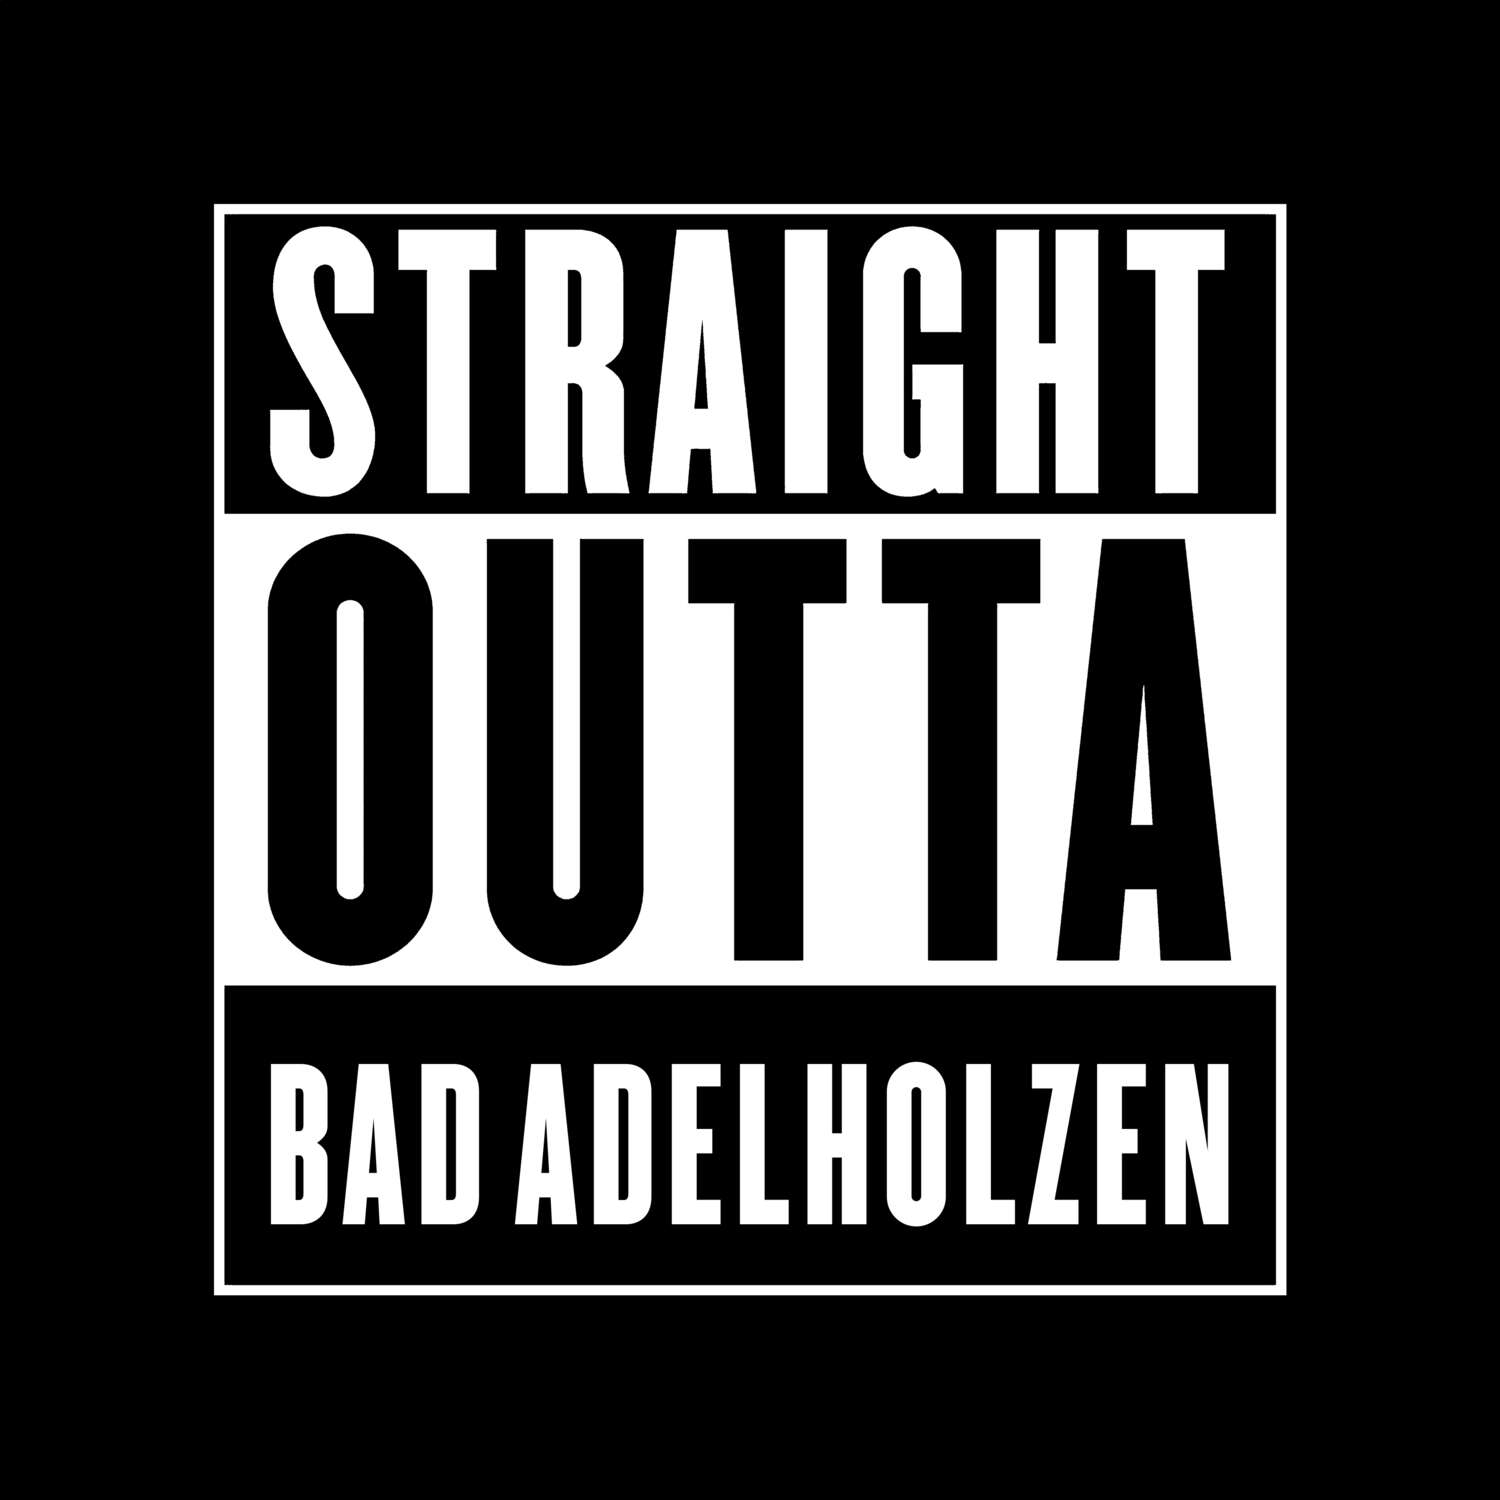 Bad Adelholzen T-Shirt »Straight Outta«